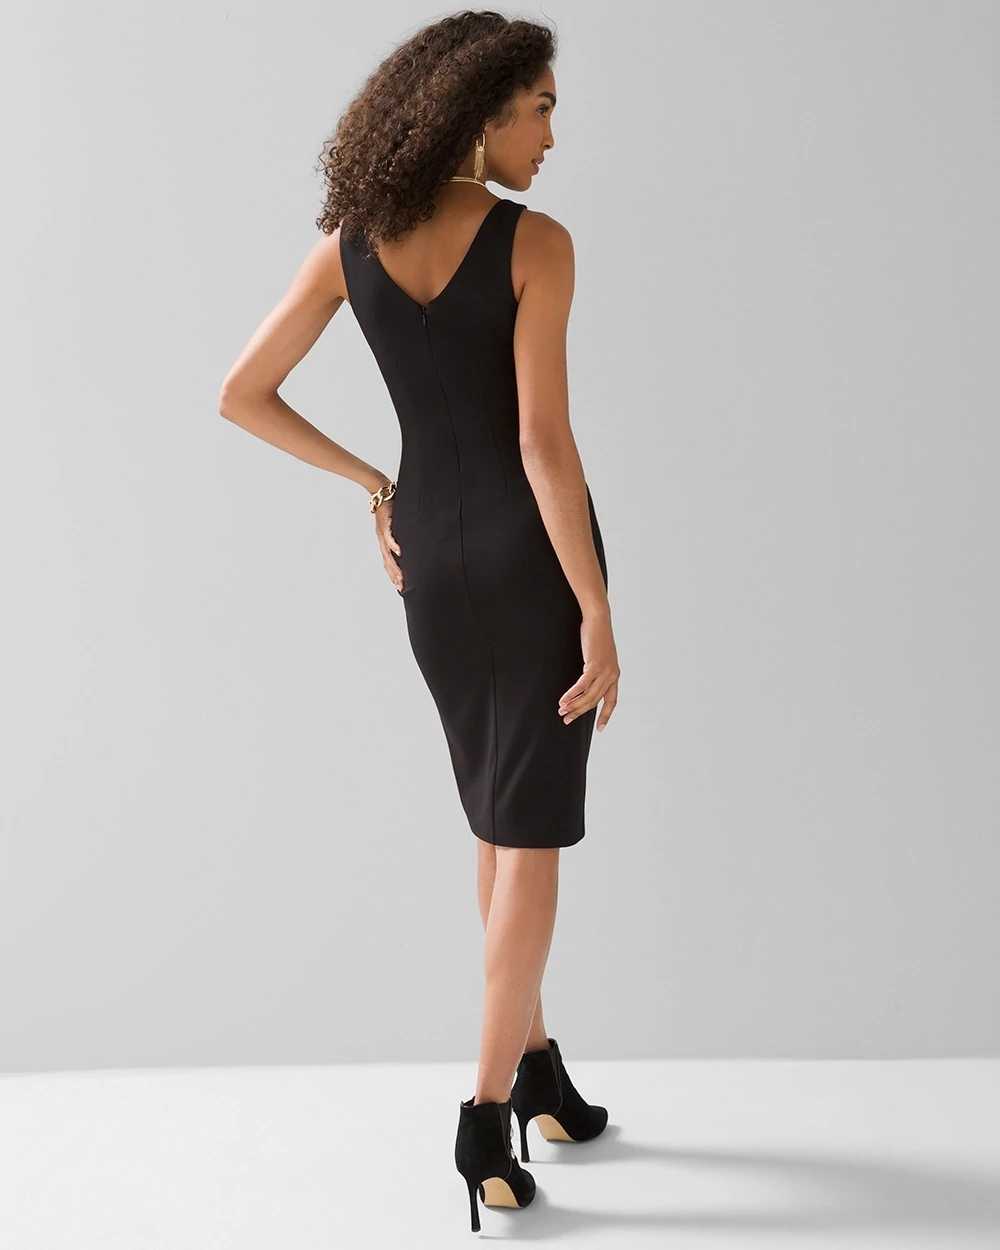 Petite WHBM® AURA Sleeveless V-Neck Sheath Dress click to view larger image.